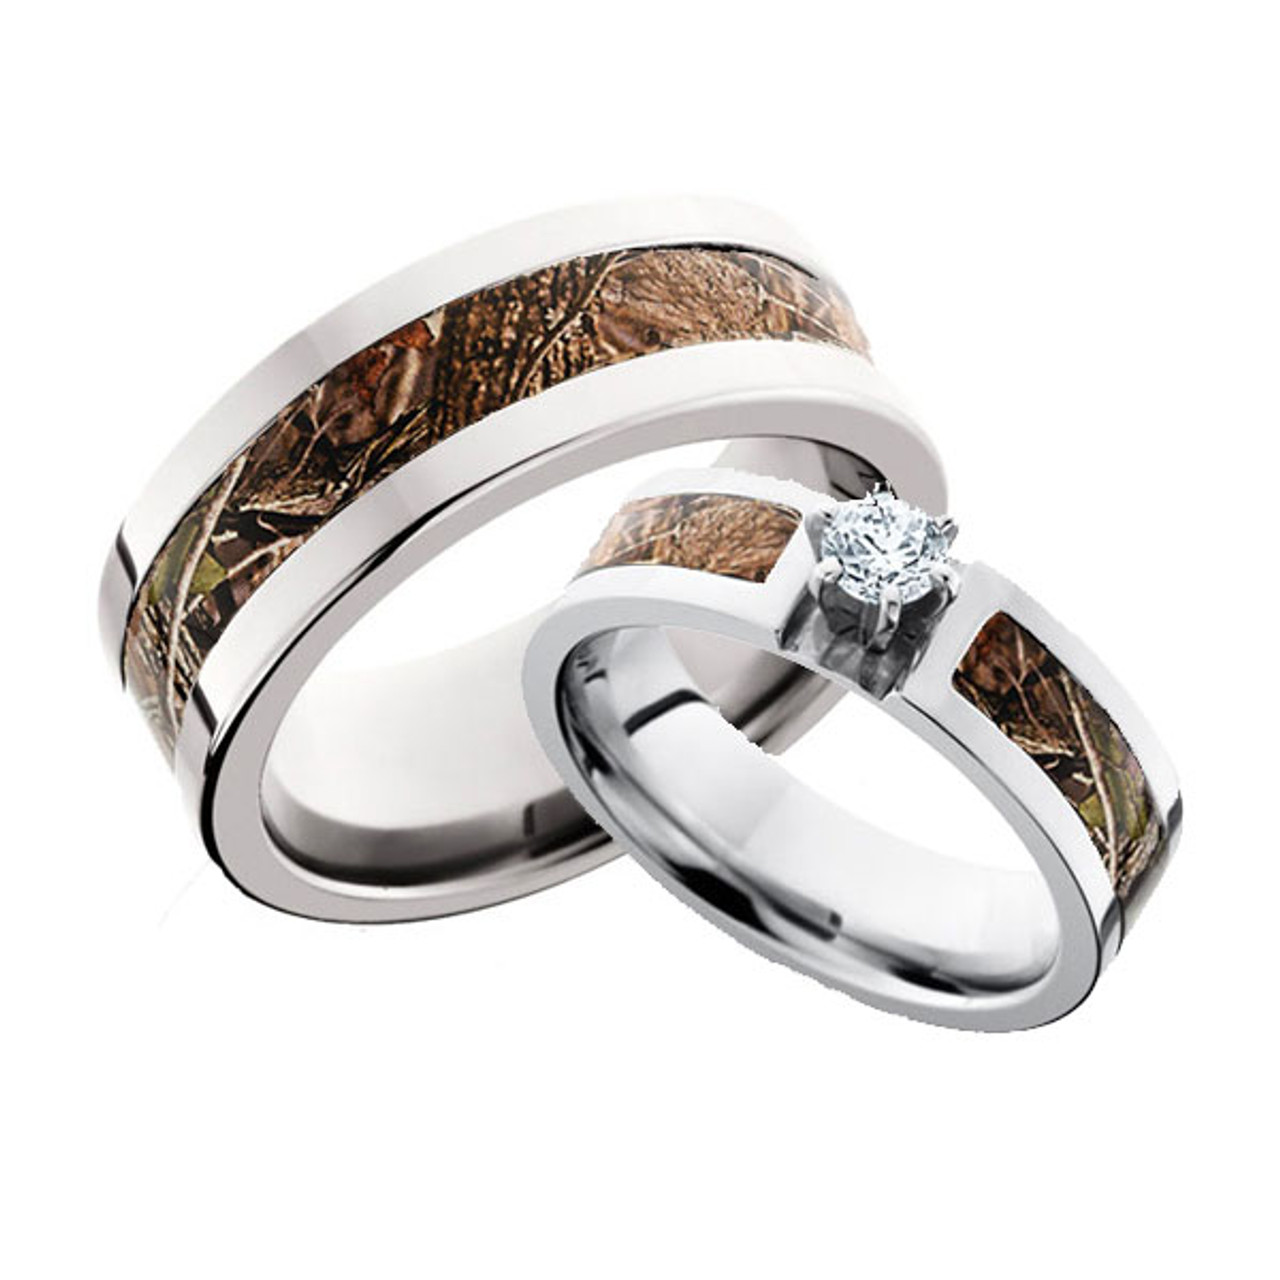 Blaze Orange Camo Titanium Wedding Ring | Six Shooter Gifts